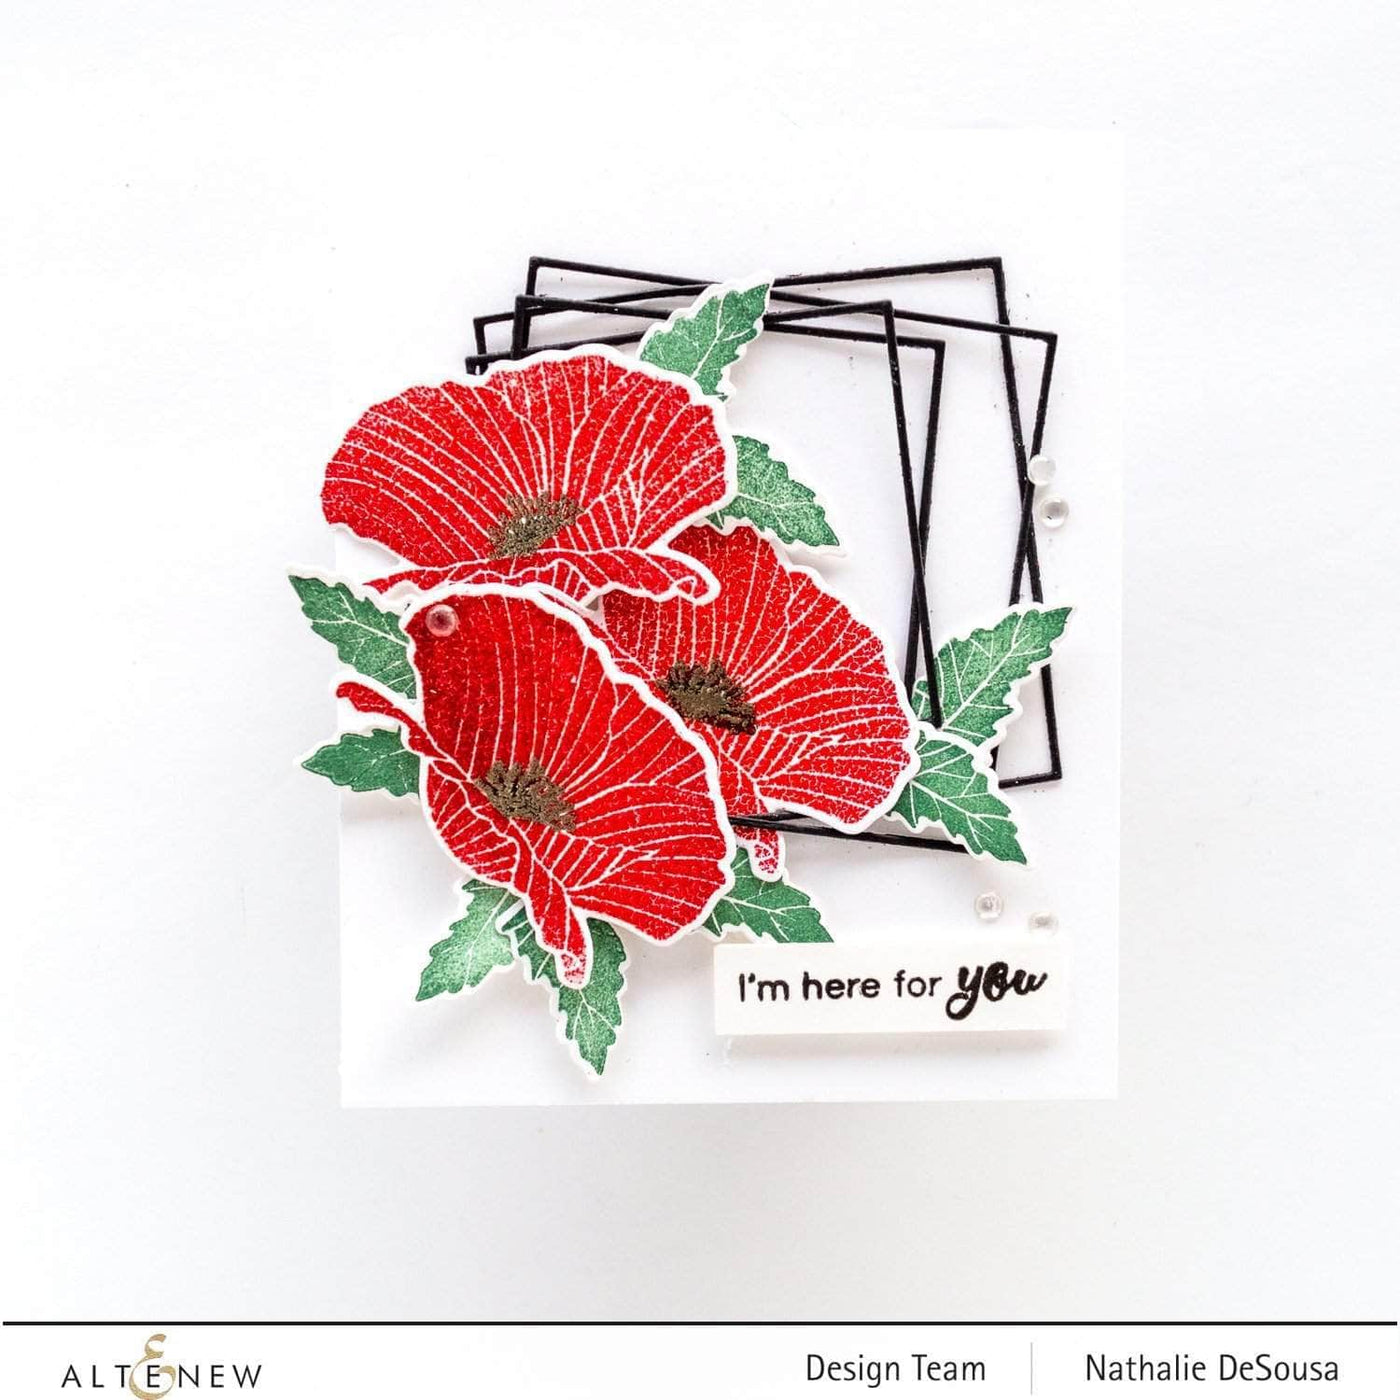 Mini Delight Mini Delight: Poppy Stamp & Die Set